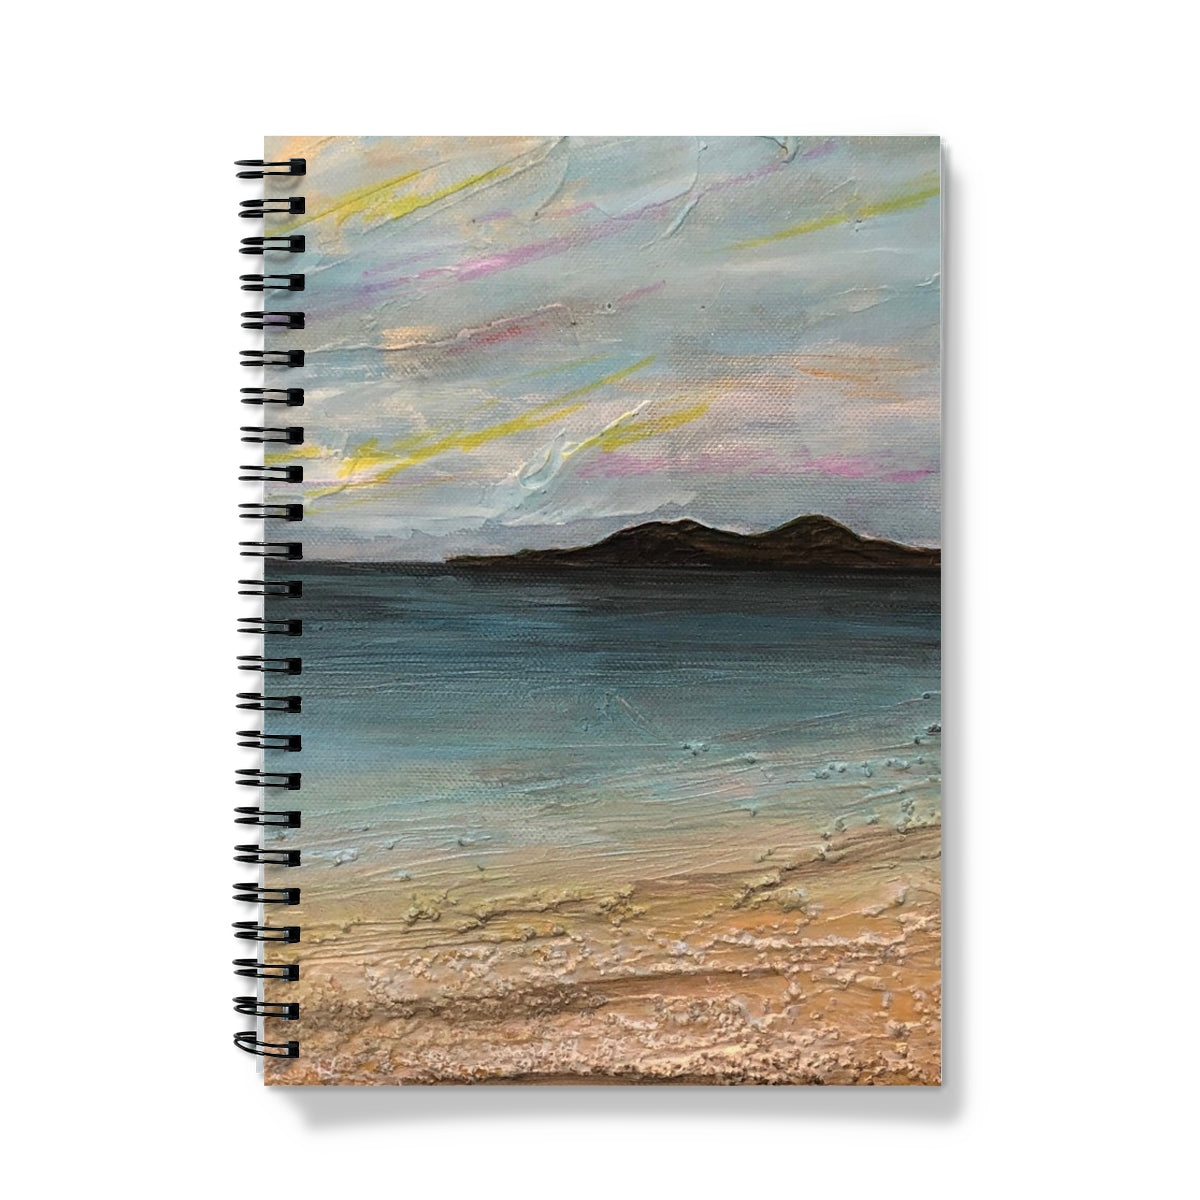 Garrynamonie Beach South Uist Art Gifts Notebook-Journals & Notebooks-Hebridean Islands Art Gallery-A4-Graph-Paintings, Prints, Homeware, Art Gifts From Scotland By Scottish Artist Kevin Hunter